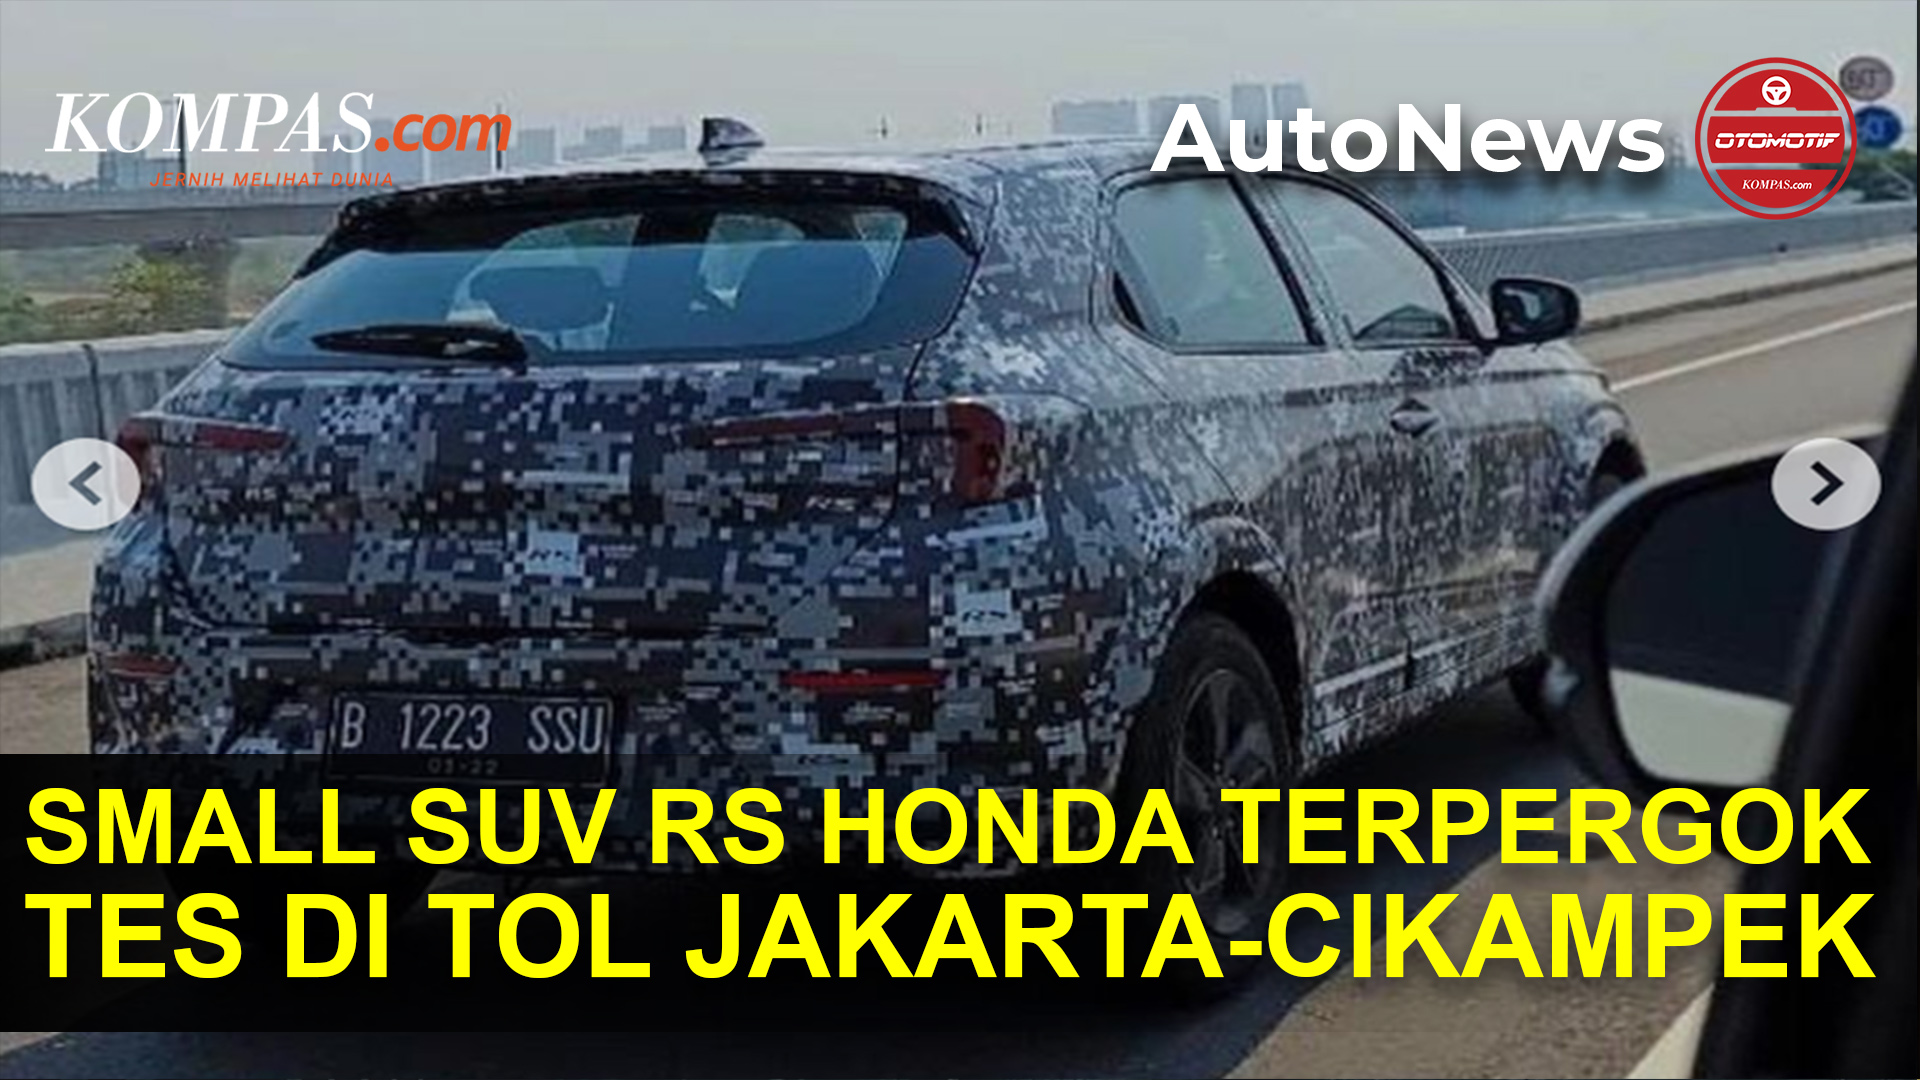 Small SUV RS Honda Tepergok Tes Jalan di Tol Jakarta-Cikampek